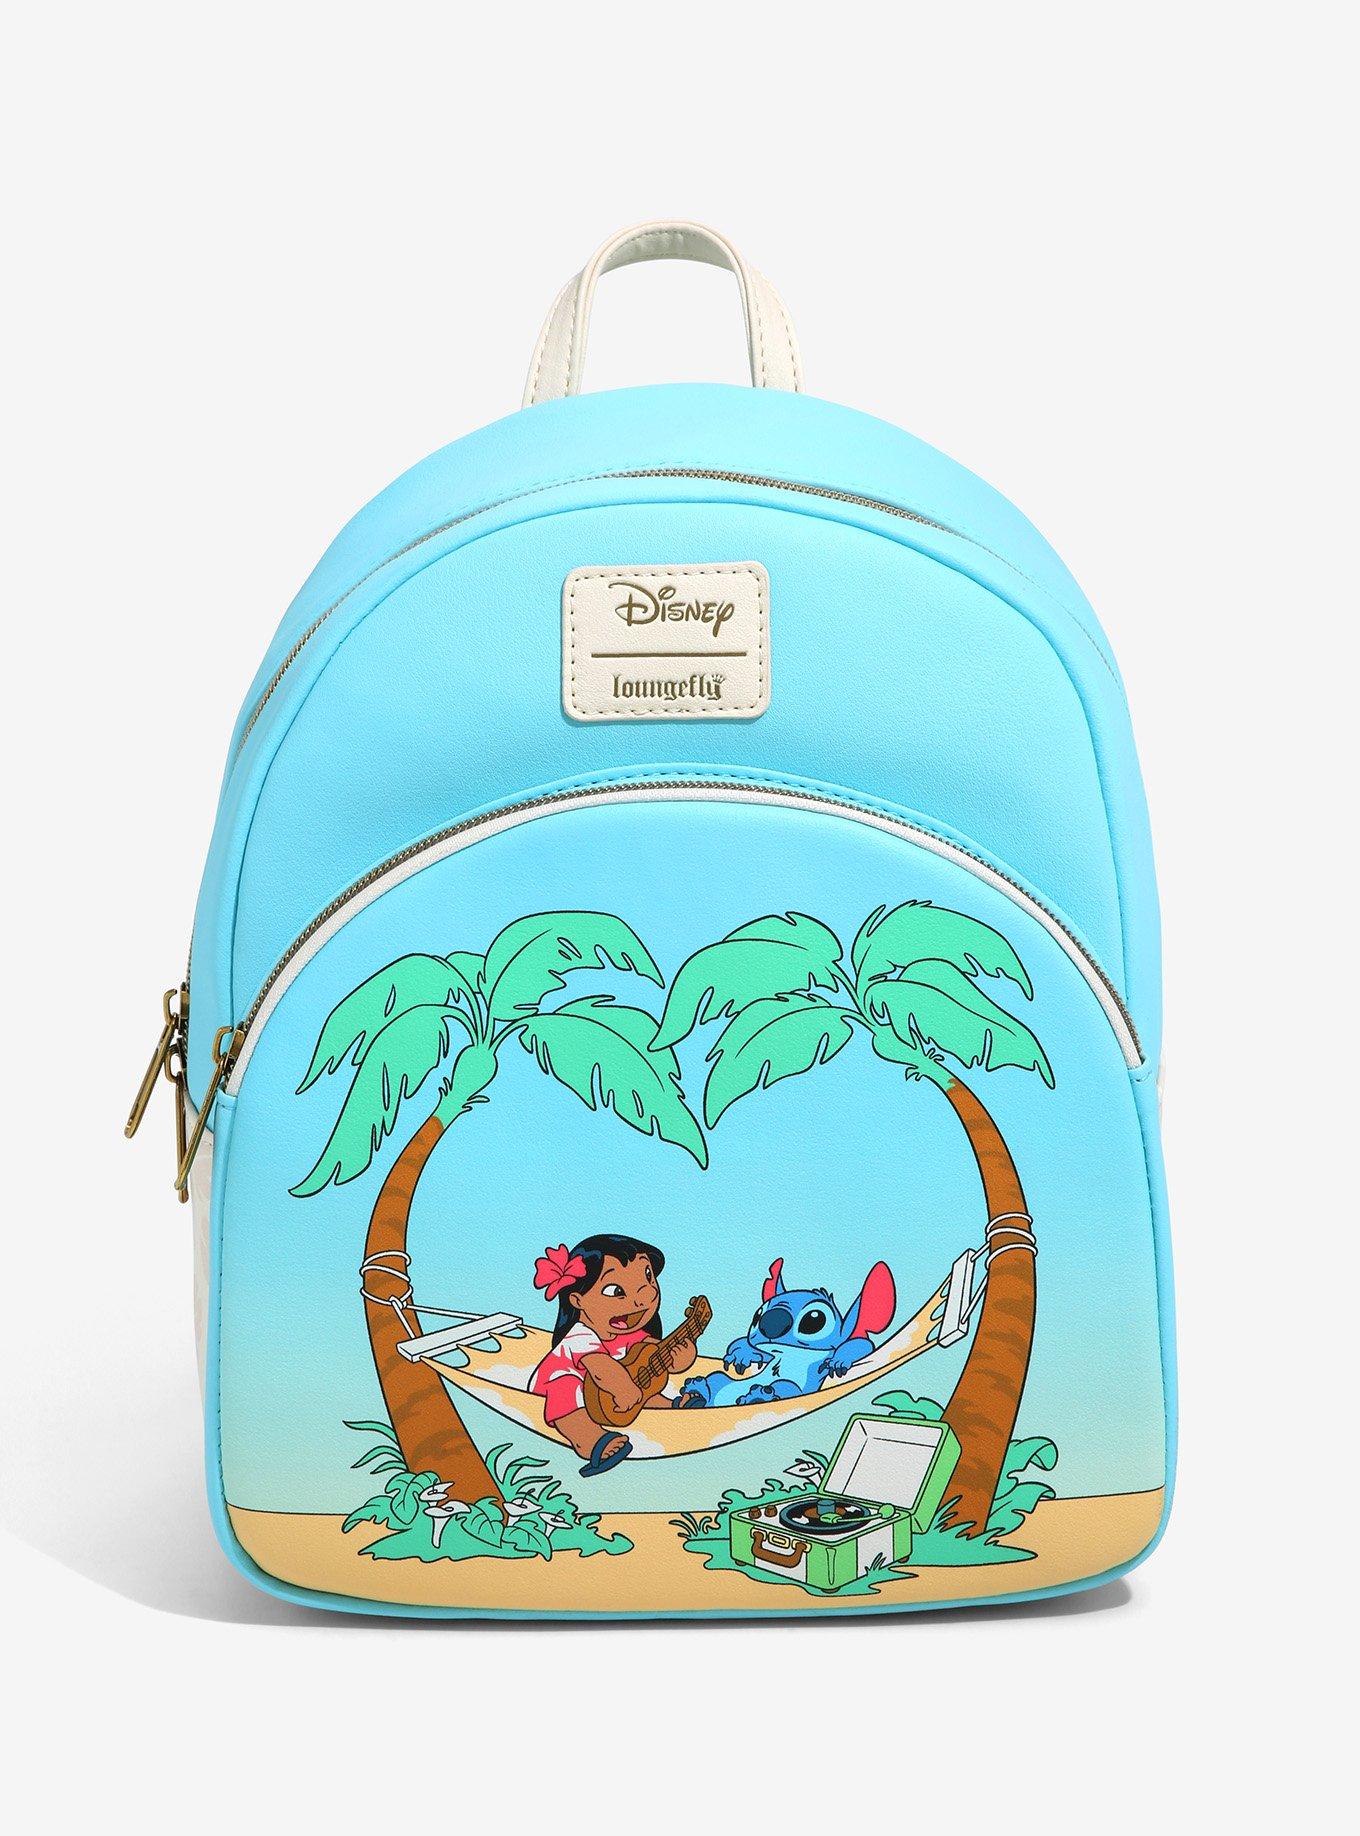 Loungefly Disney Lilo & Stitch Upside Down Mini Backpack Bookbag